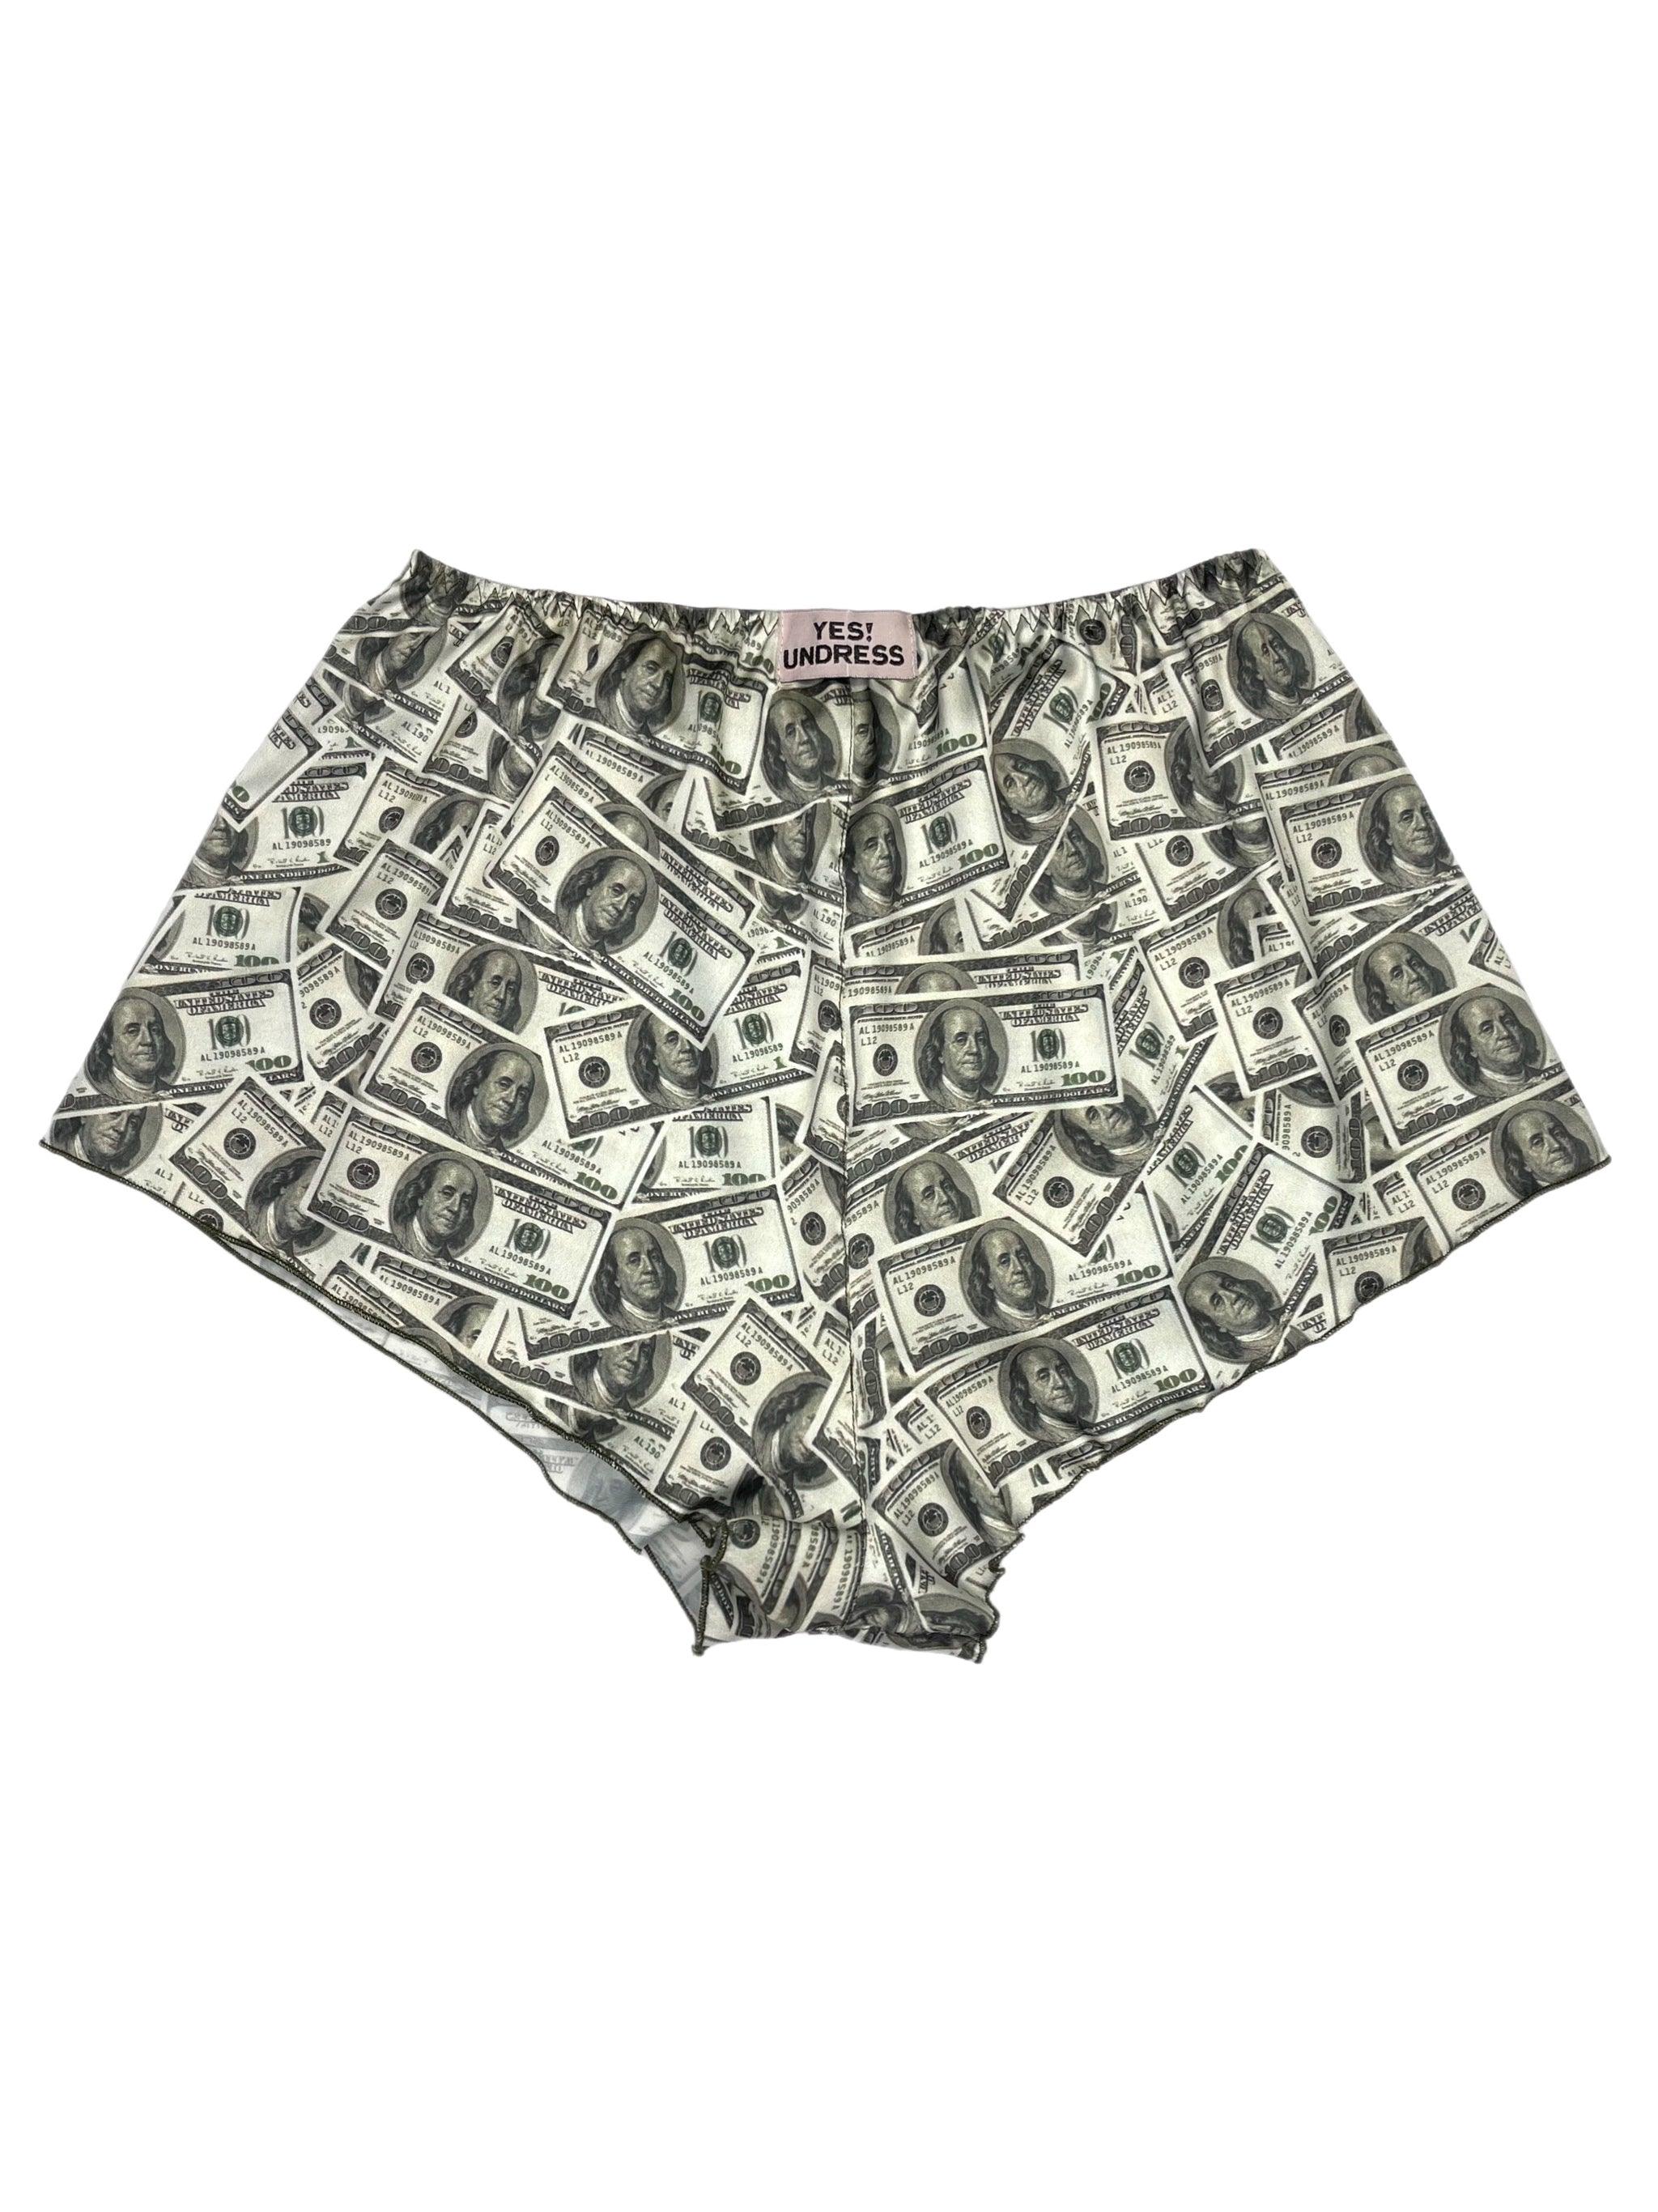 Kiki money shorts